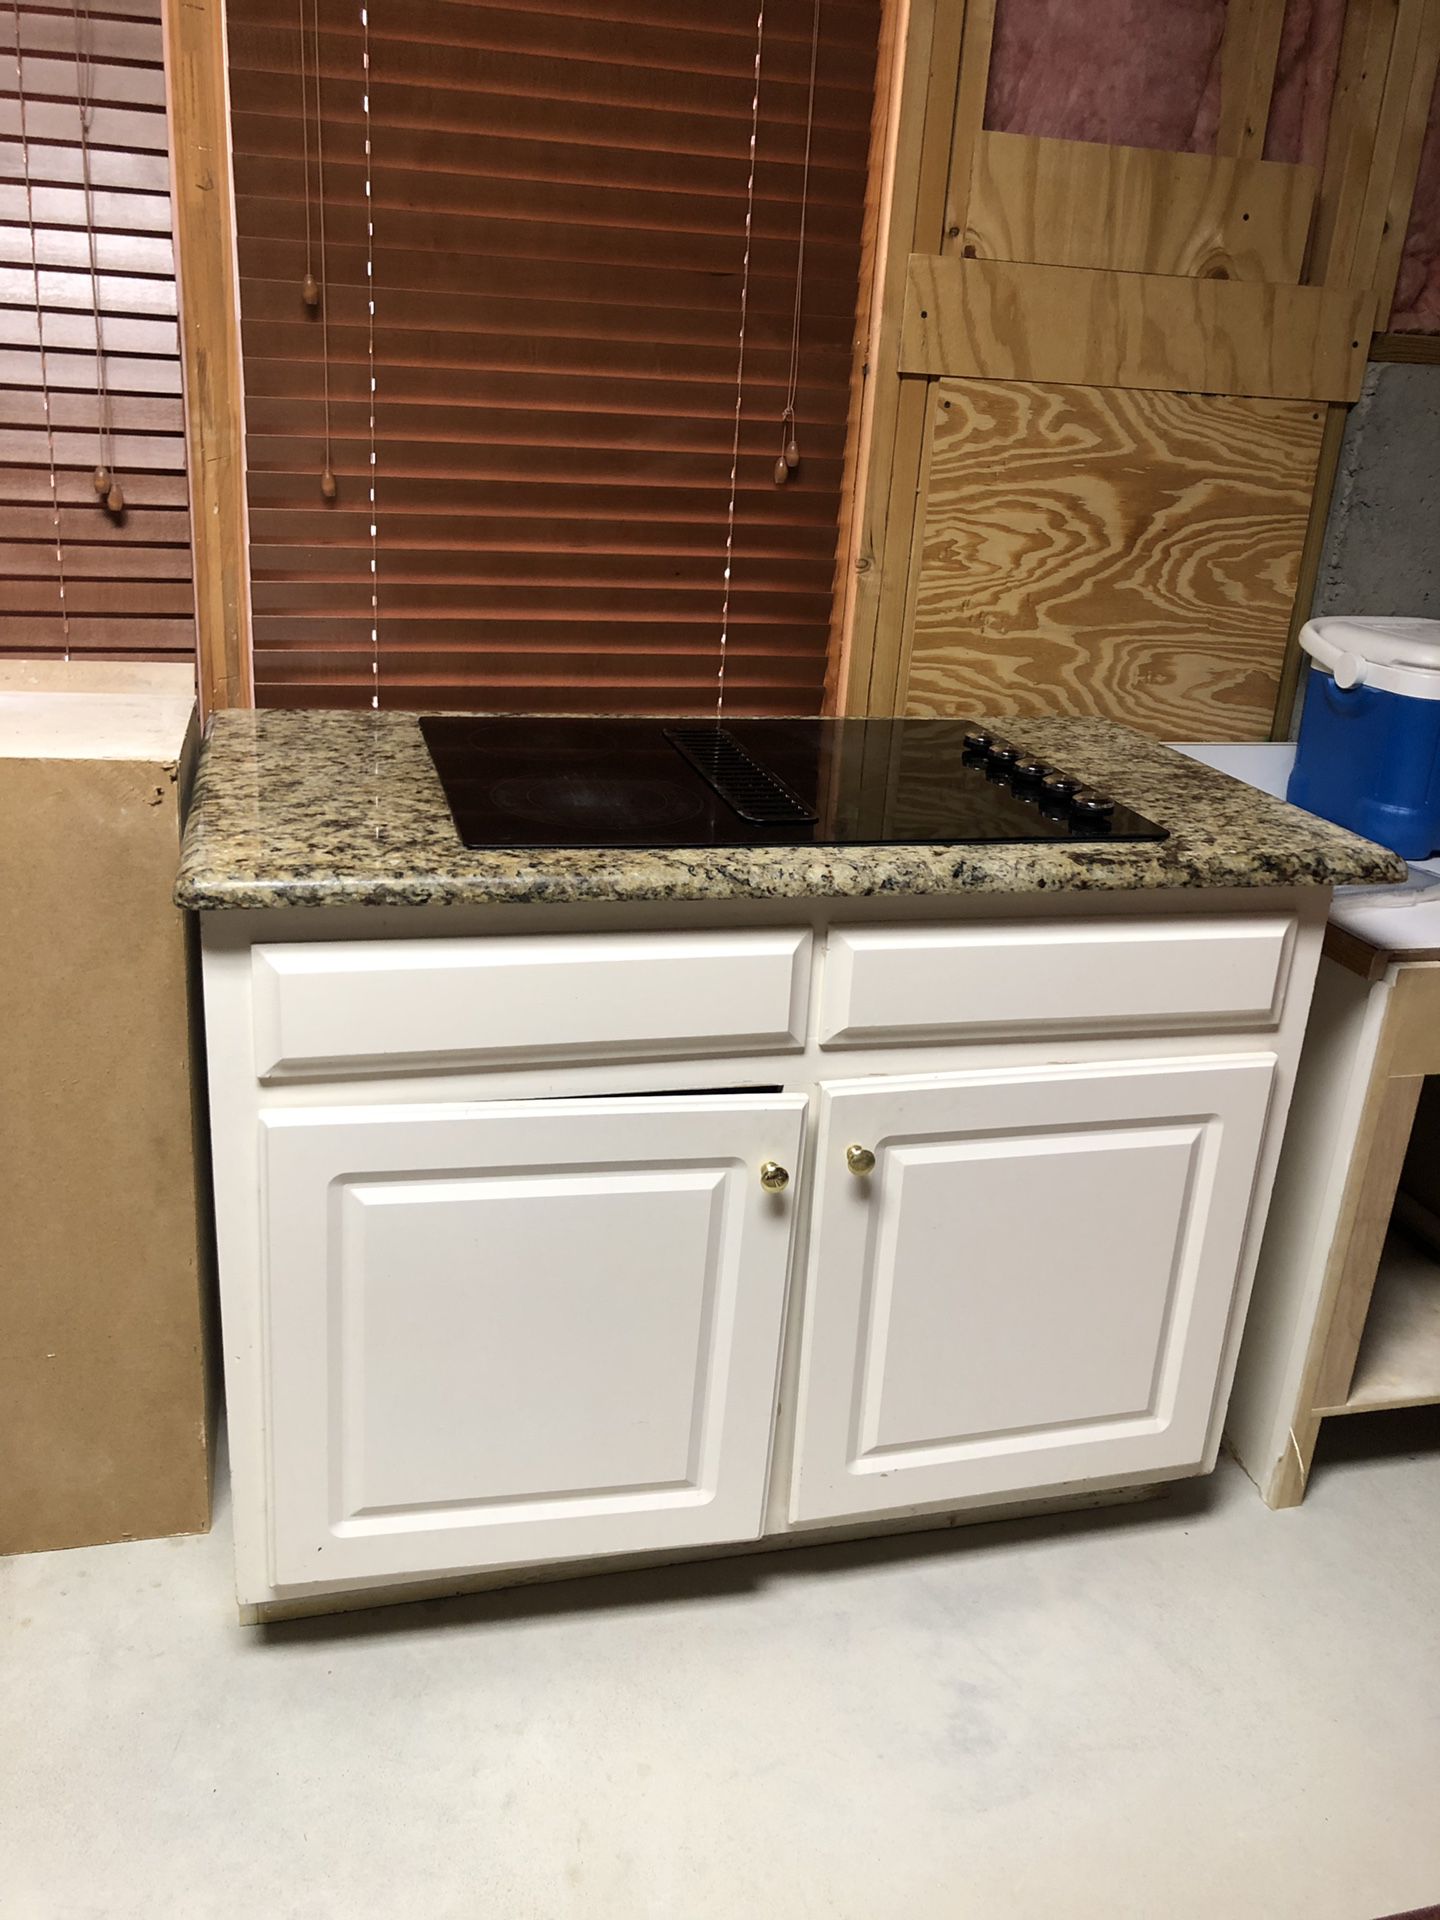 KitchenAid electric 4 burner cooktop + granite countertop + Kitchen island + Desk/cabinet